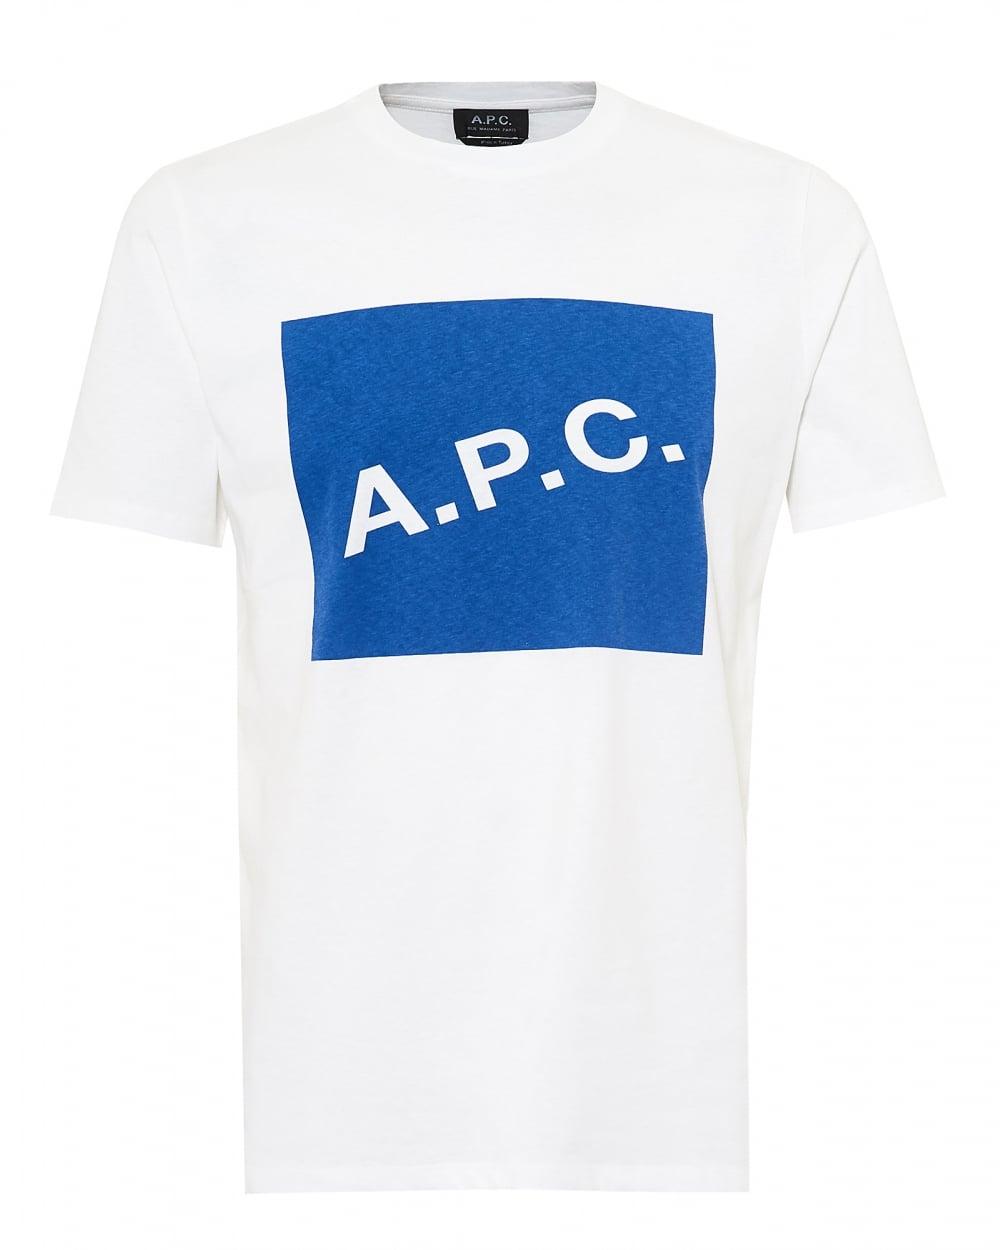 Blue and White Box Logo - A.P.C. Mens Kraft T-Shirt, A.P.C. Box Logo White Tee